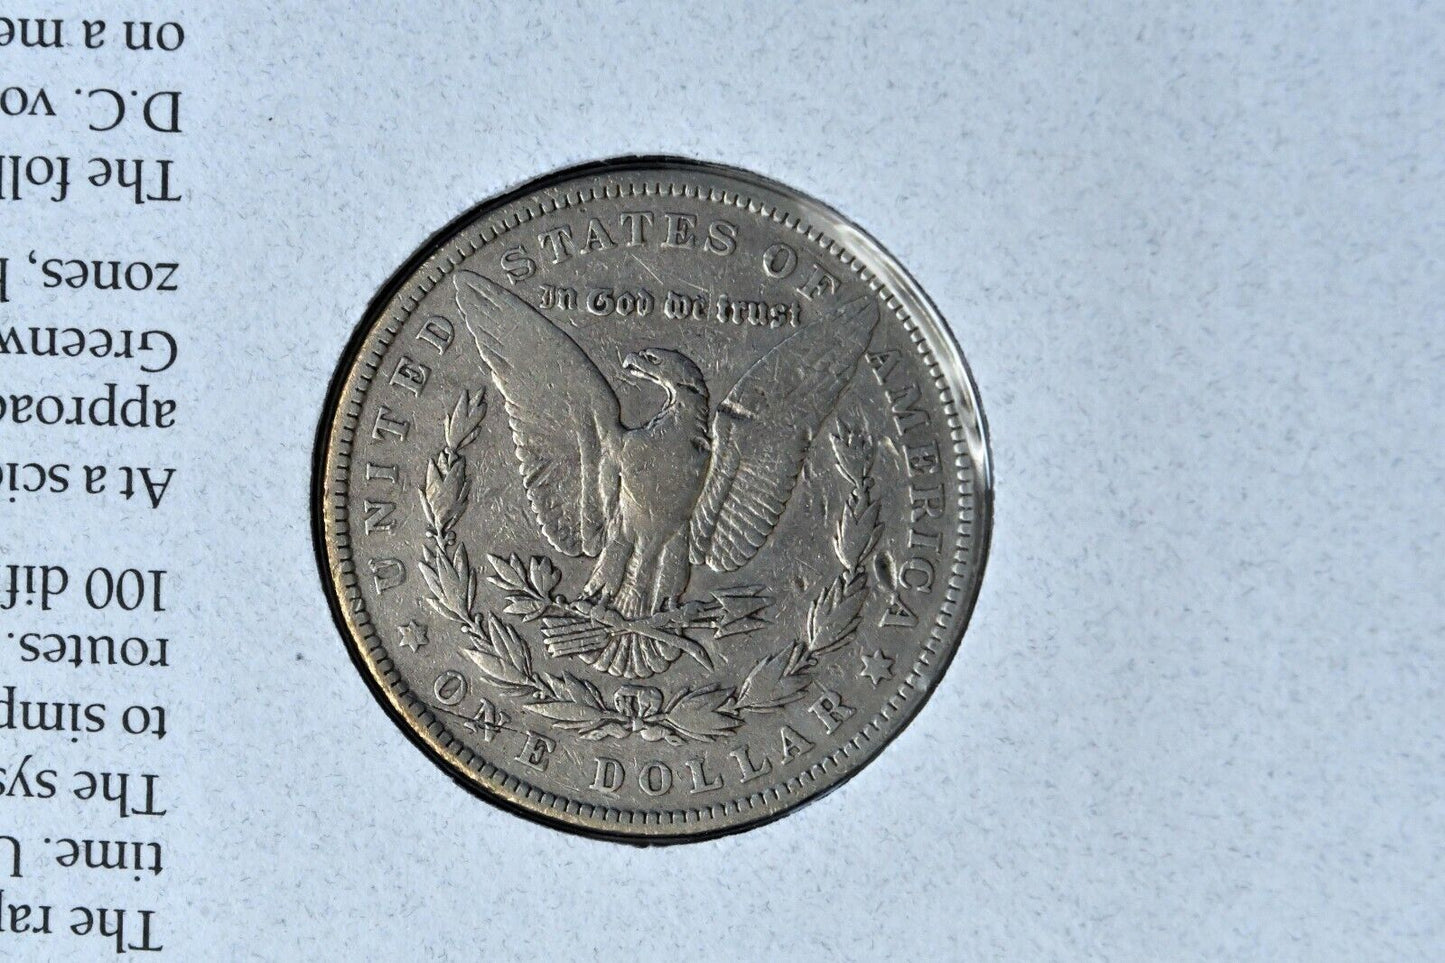 1883 Morgan Silver Dollar Postal Commemorative Society Silver Dollar Collection